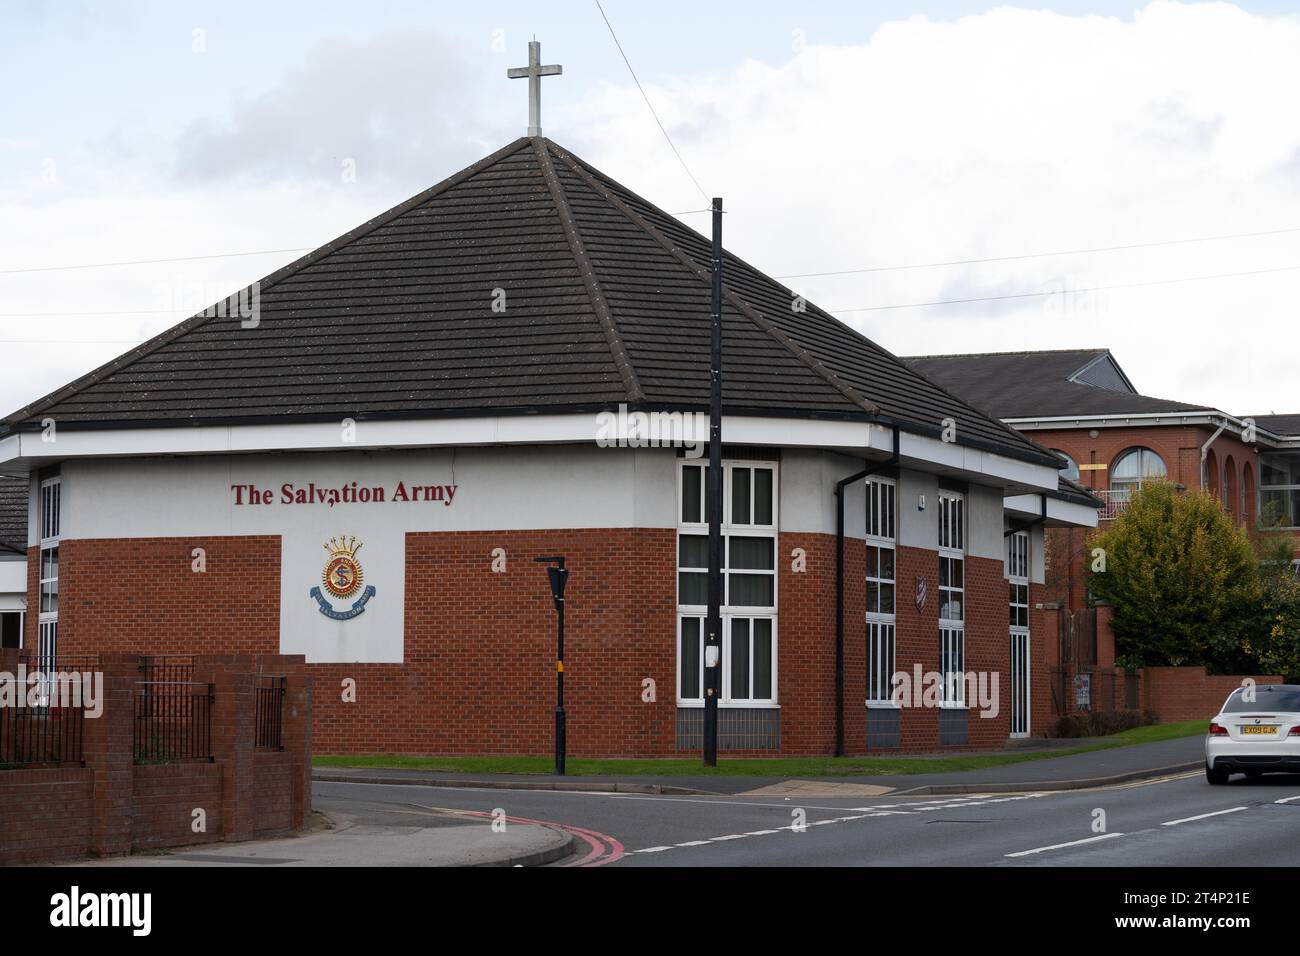 The Salvation Army building, Cradley Heath, West Midlands, England, UK Stock Photo